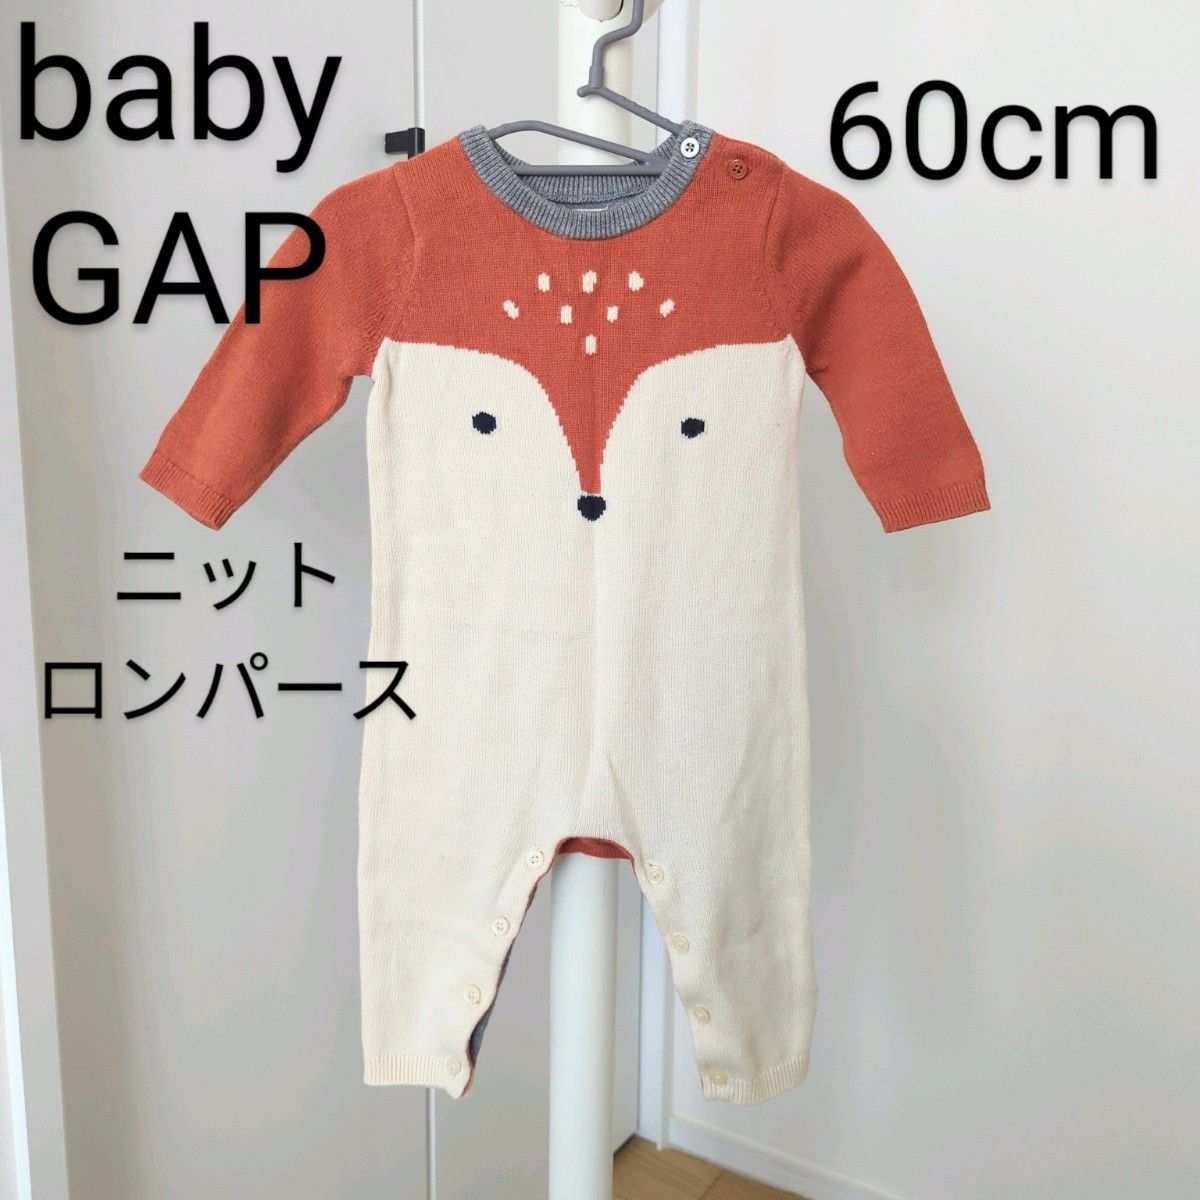 baby gap 60cm ロンパース カバーオール - ロンパース